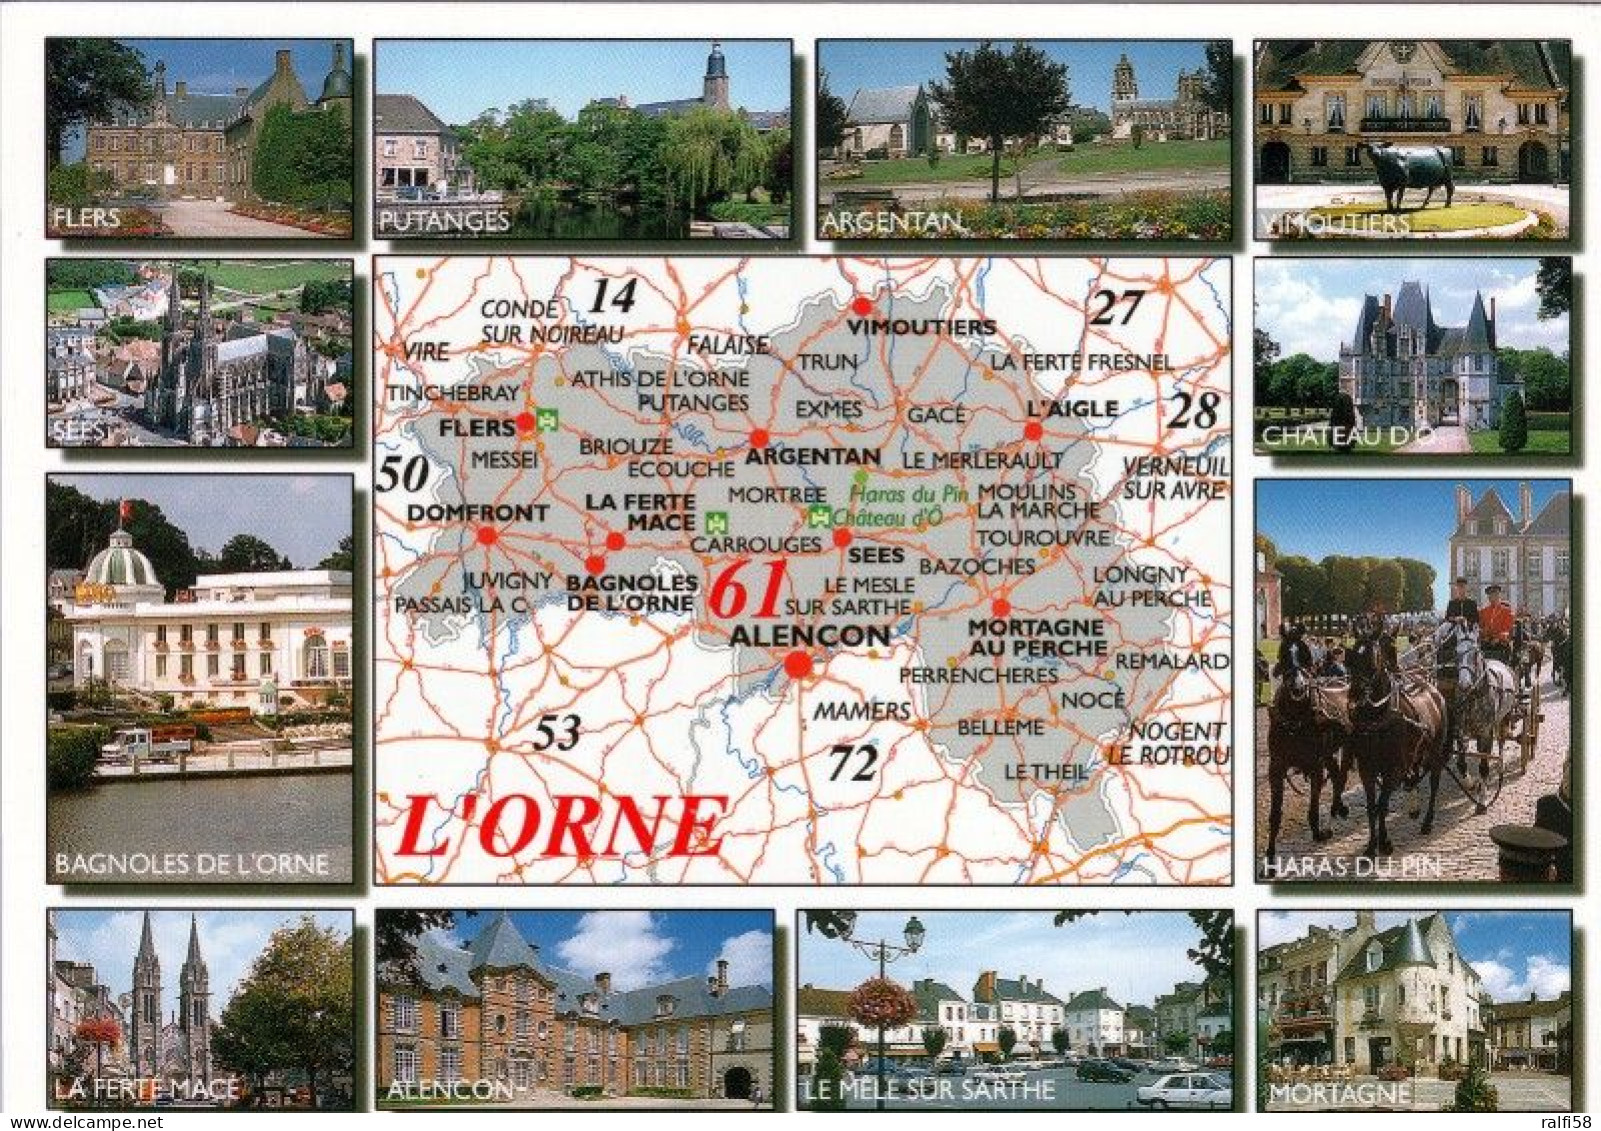 1 Map Of France * 1 Ansichtskarte Mit Der Landkarte - Département Orne - Ordnungsnummer 61 * - Landkaarten